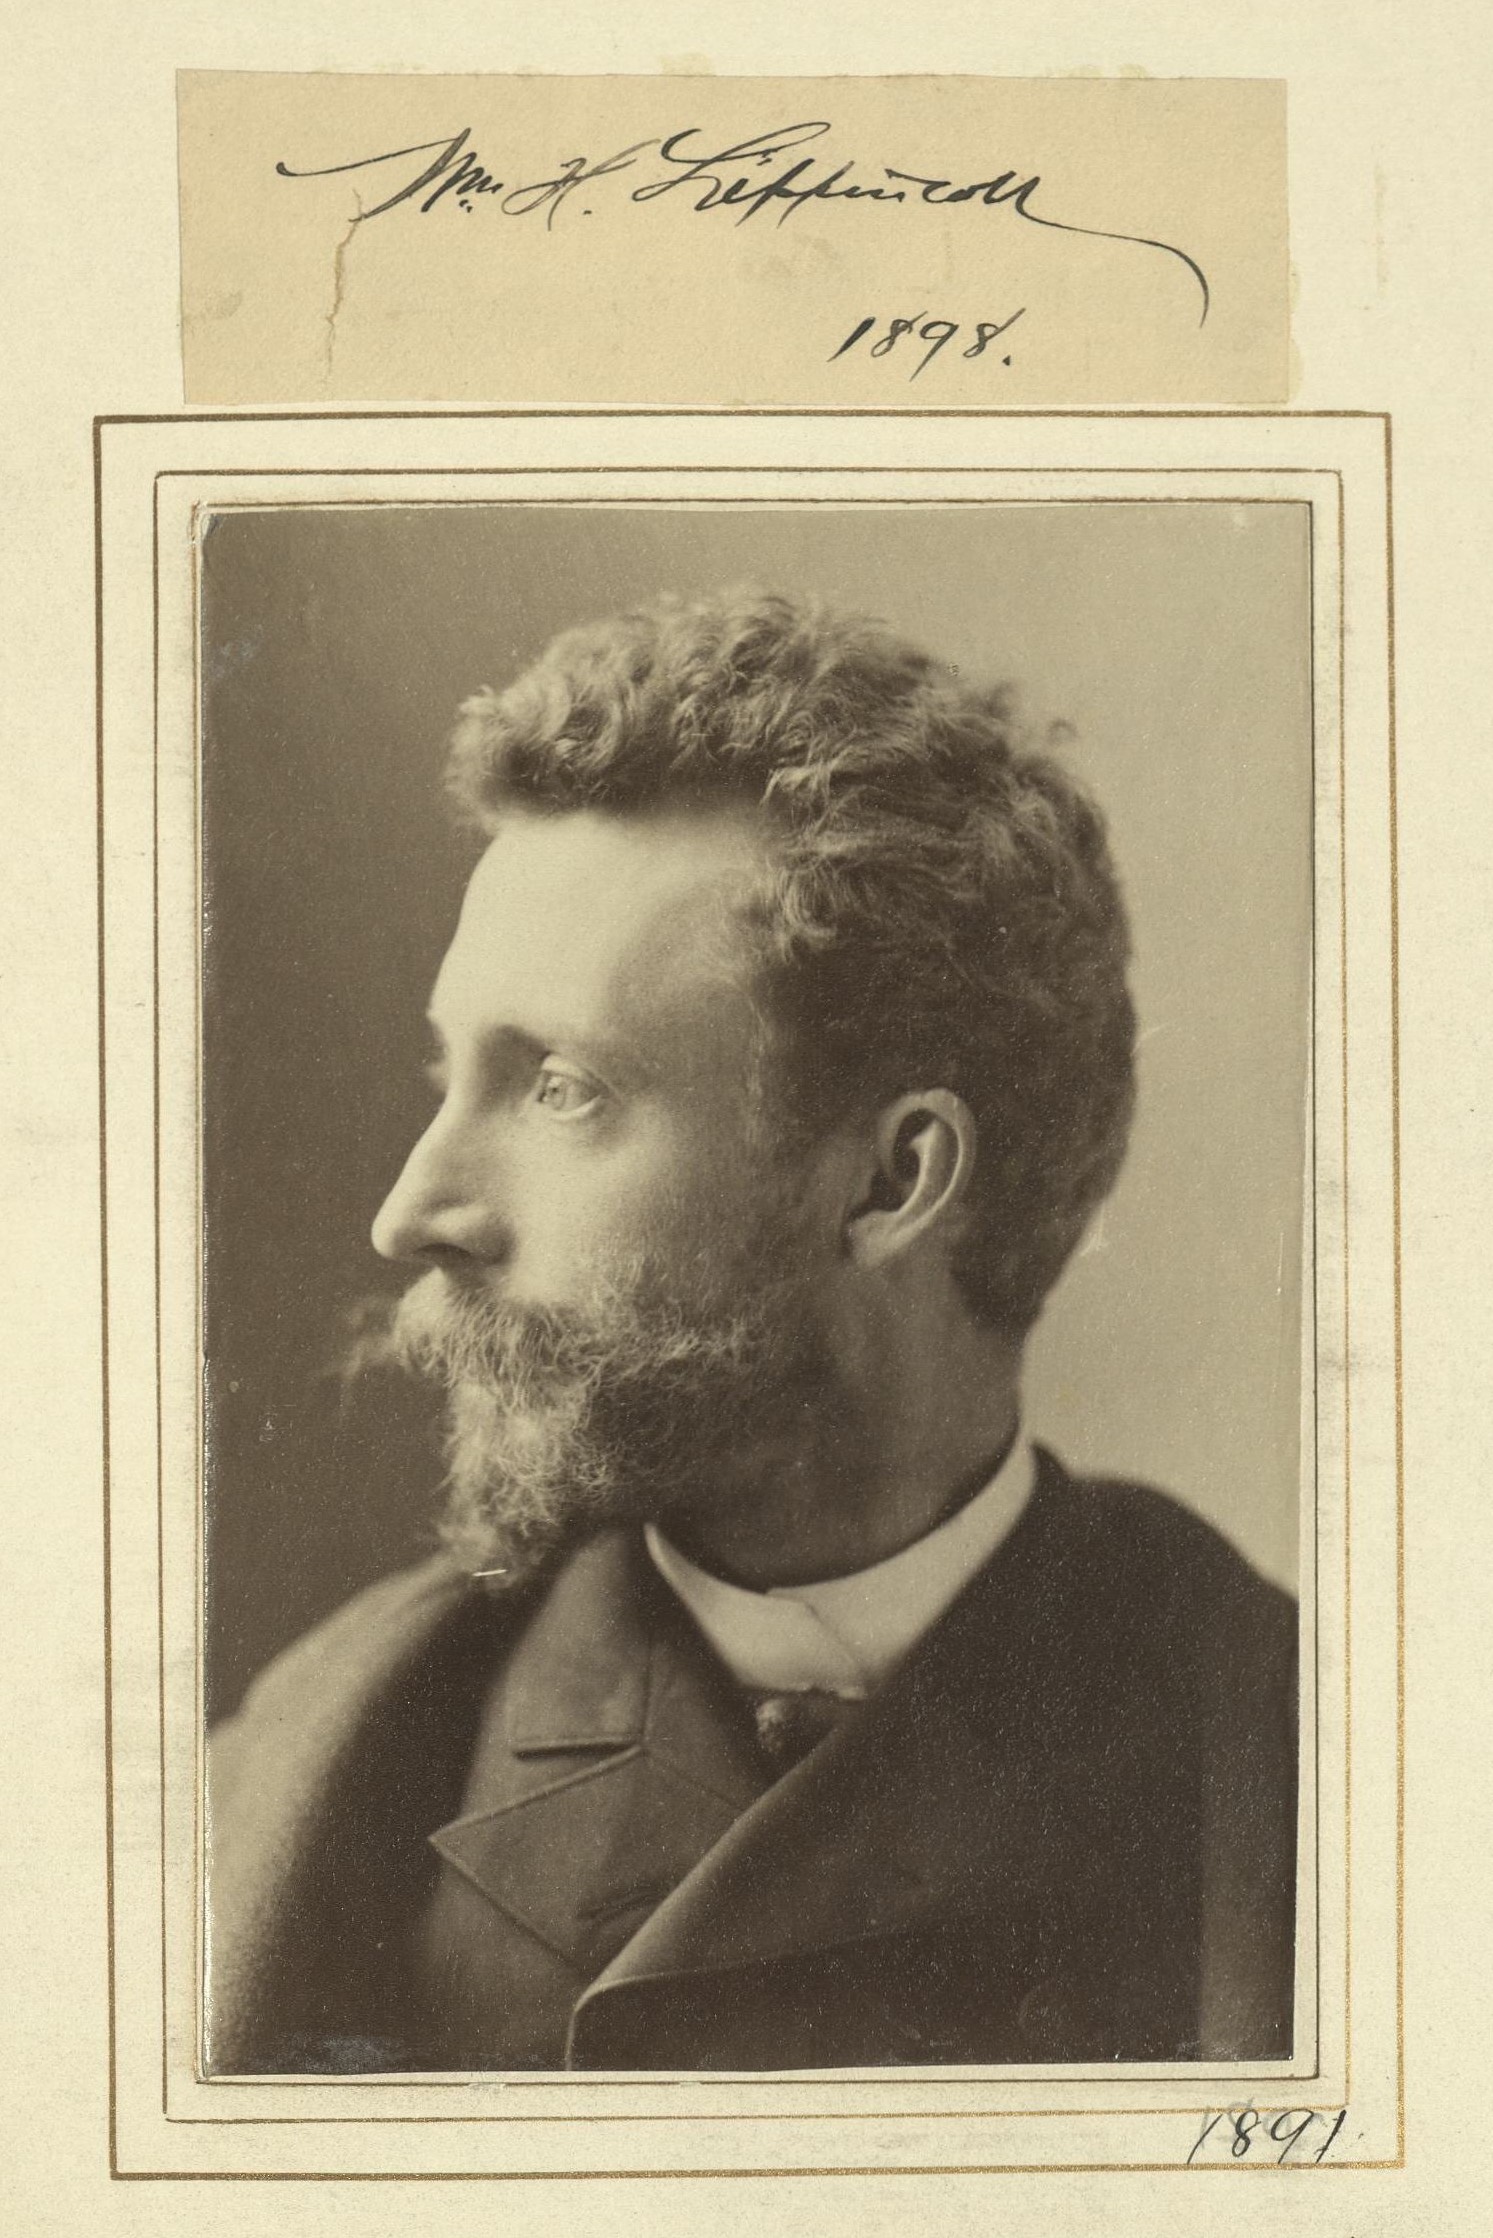 Member portrait of William H. Lippincott